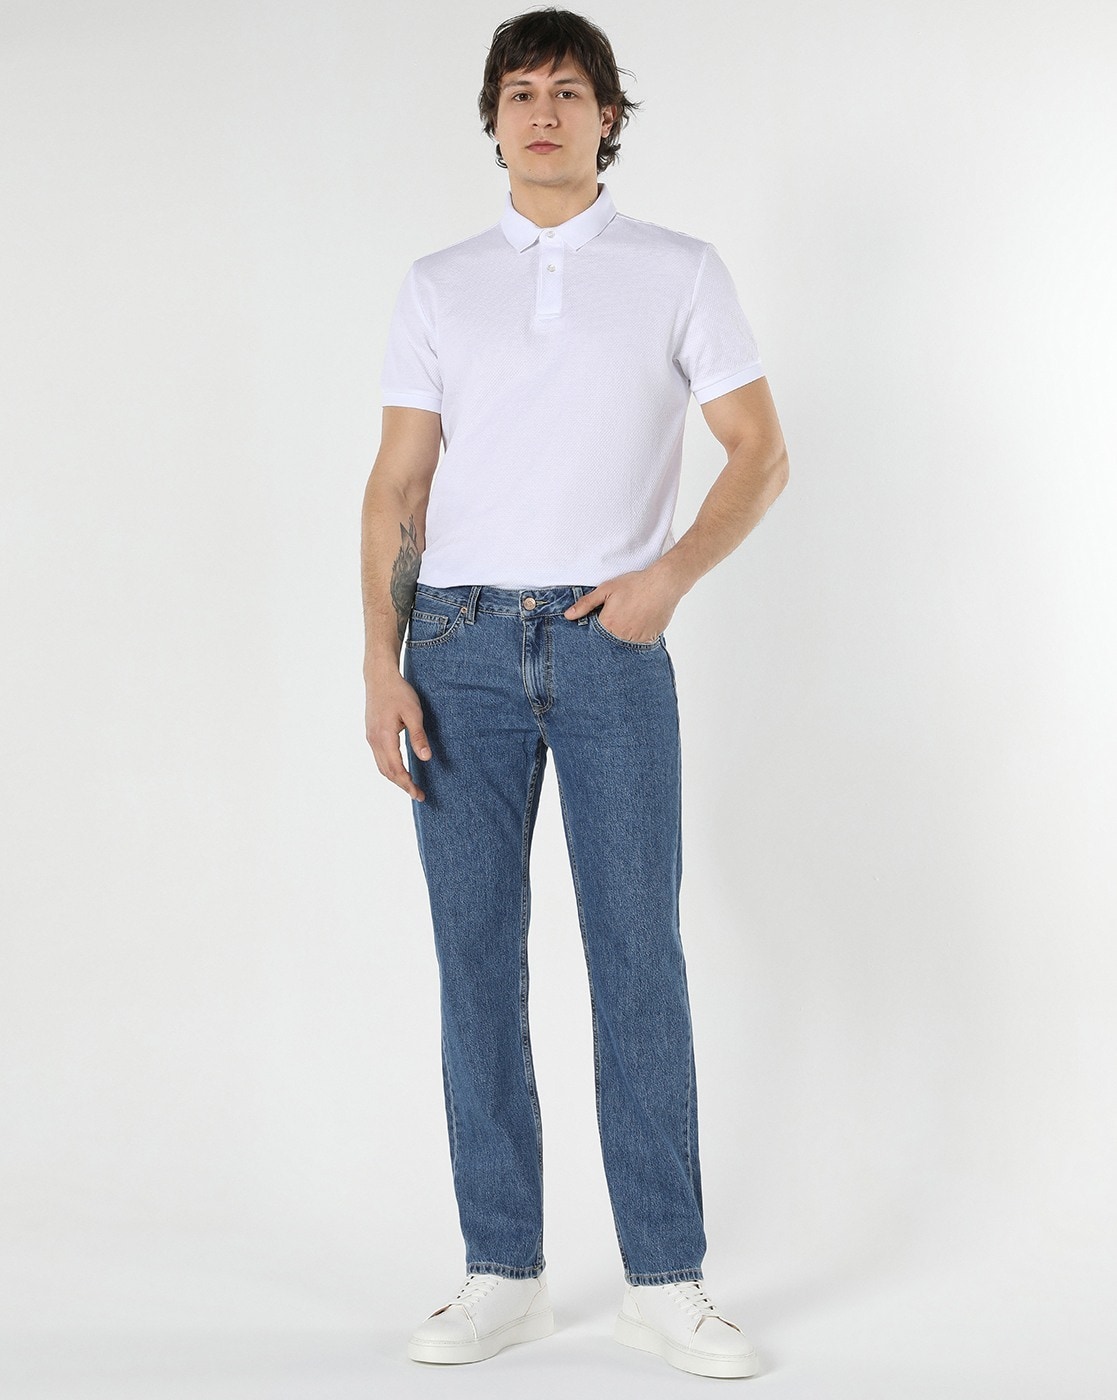 Buy Wish Karo Boys' Regular Fit Jeans (j012nnb_9-10y_Navy Blue_9-10 Years)  at Amazon.in